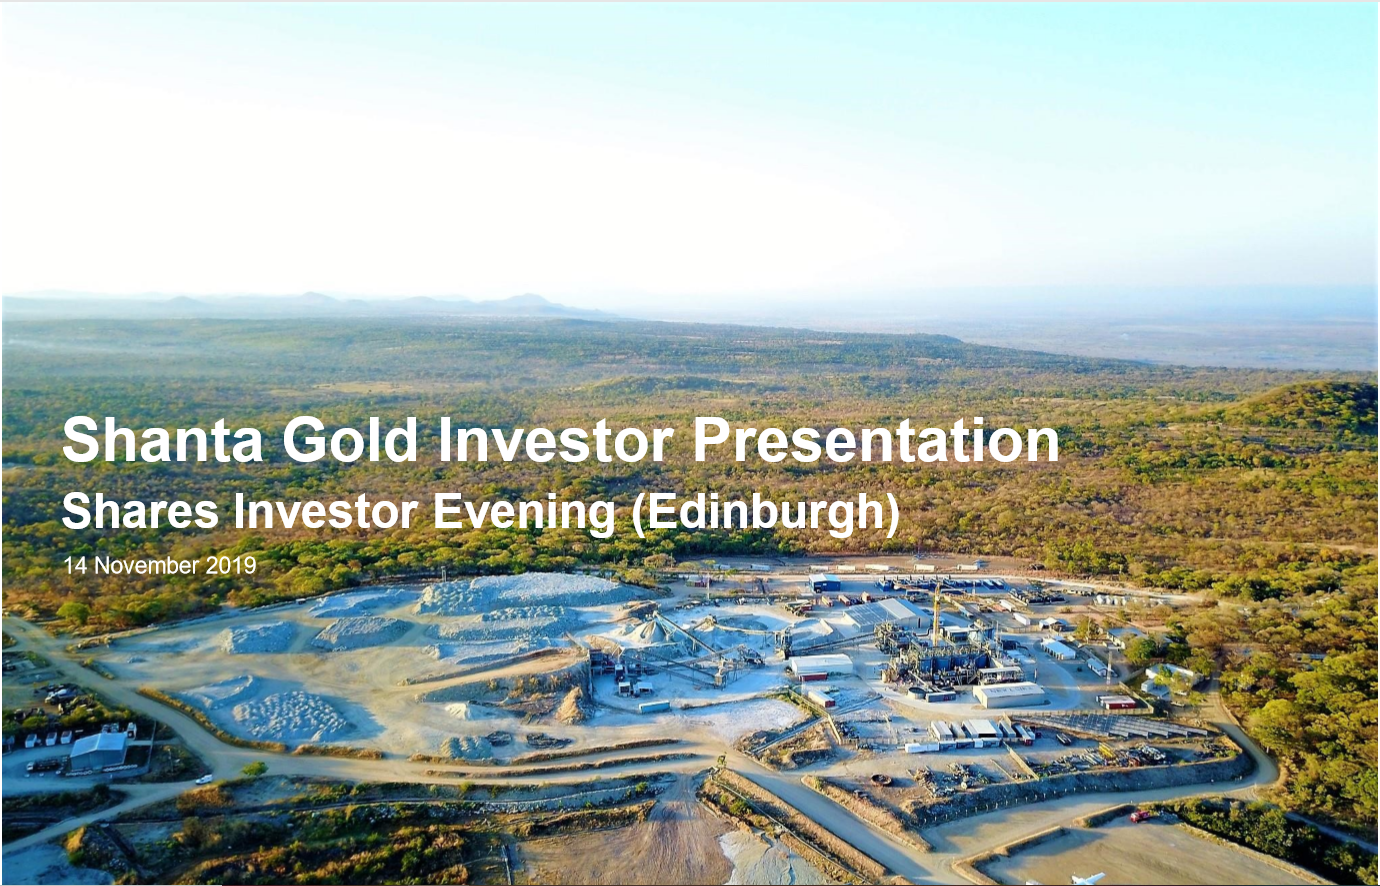 Shares Investor Evening - Presentation